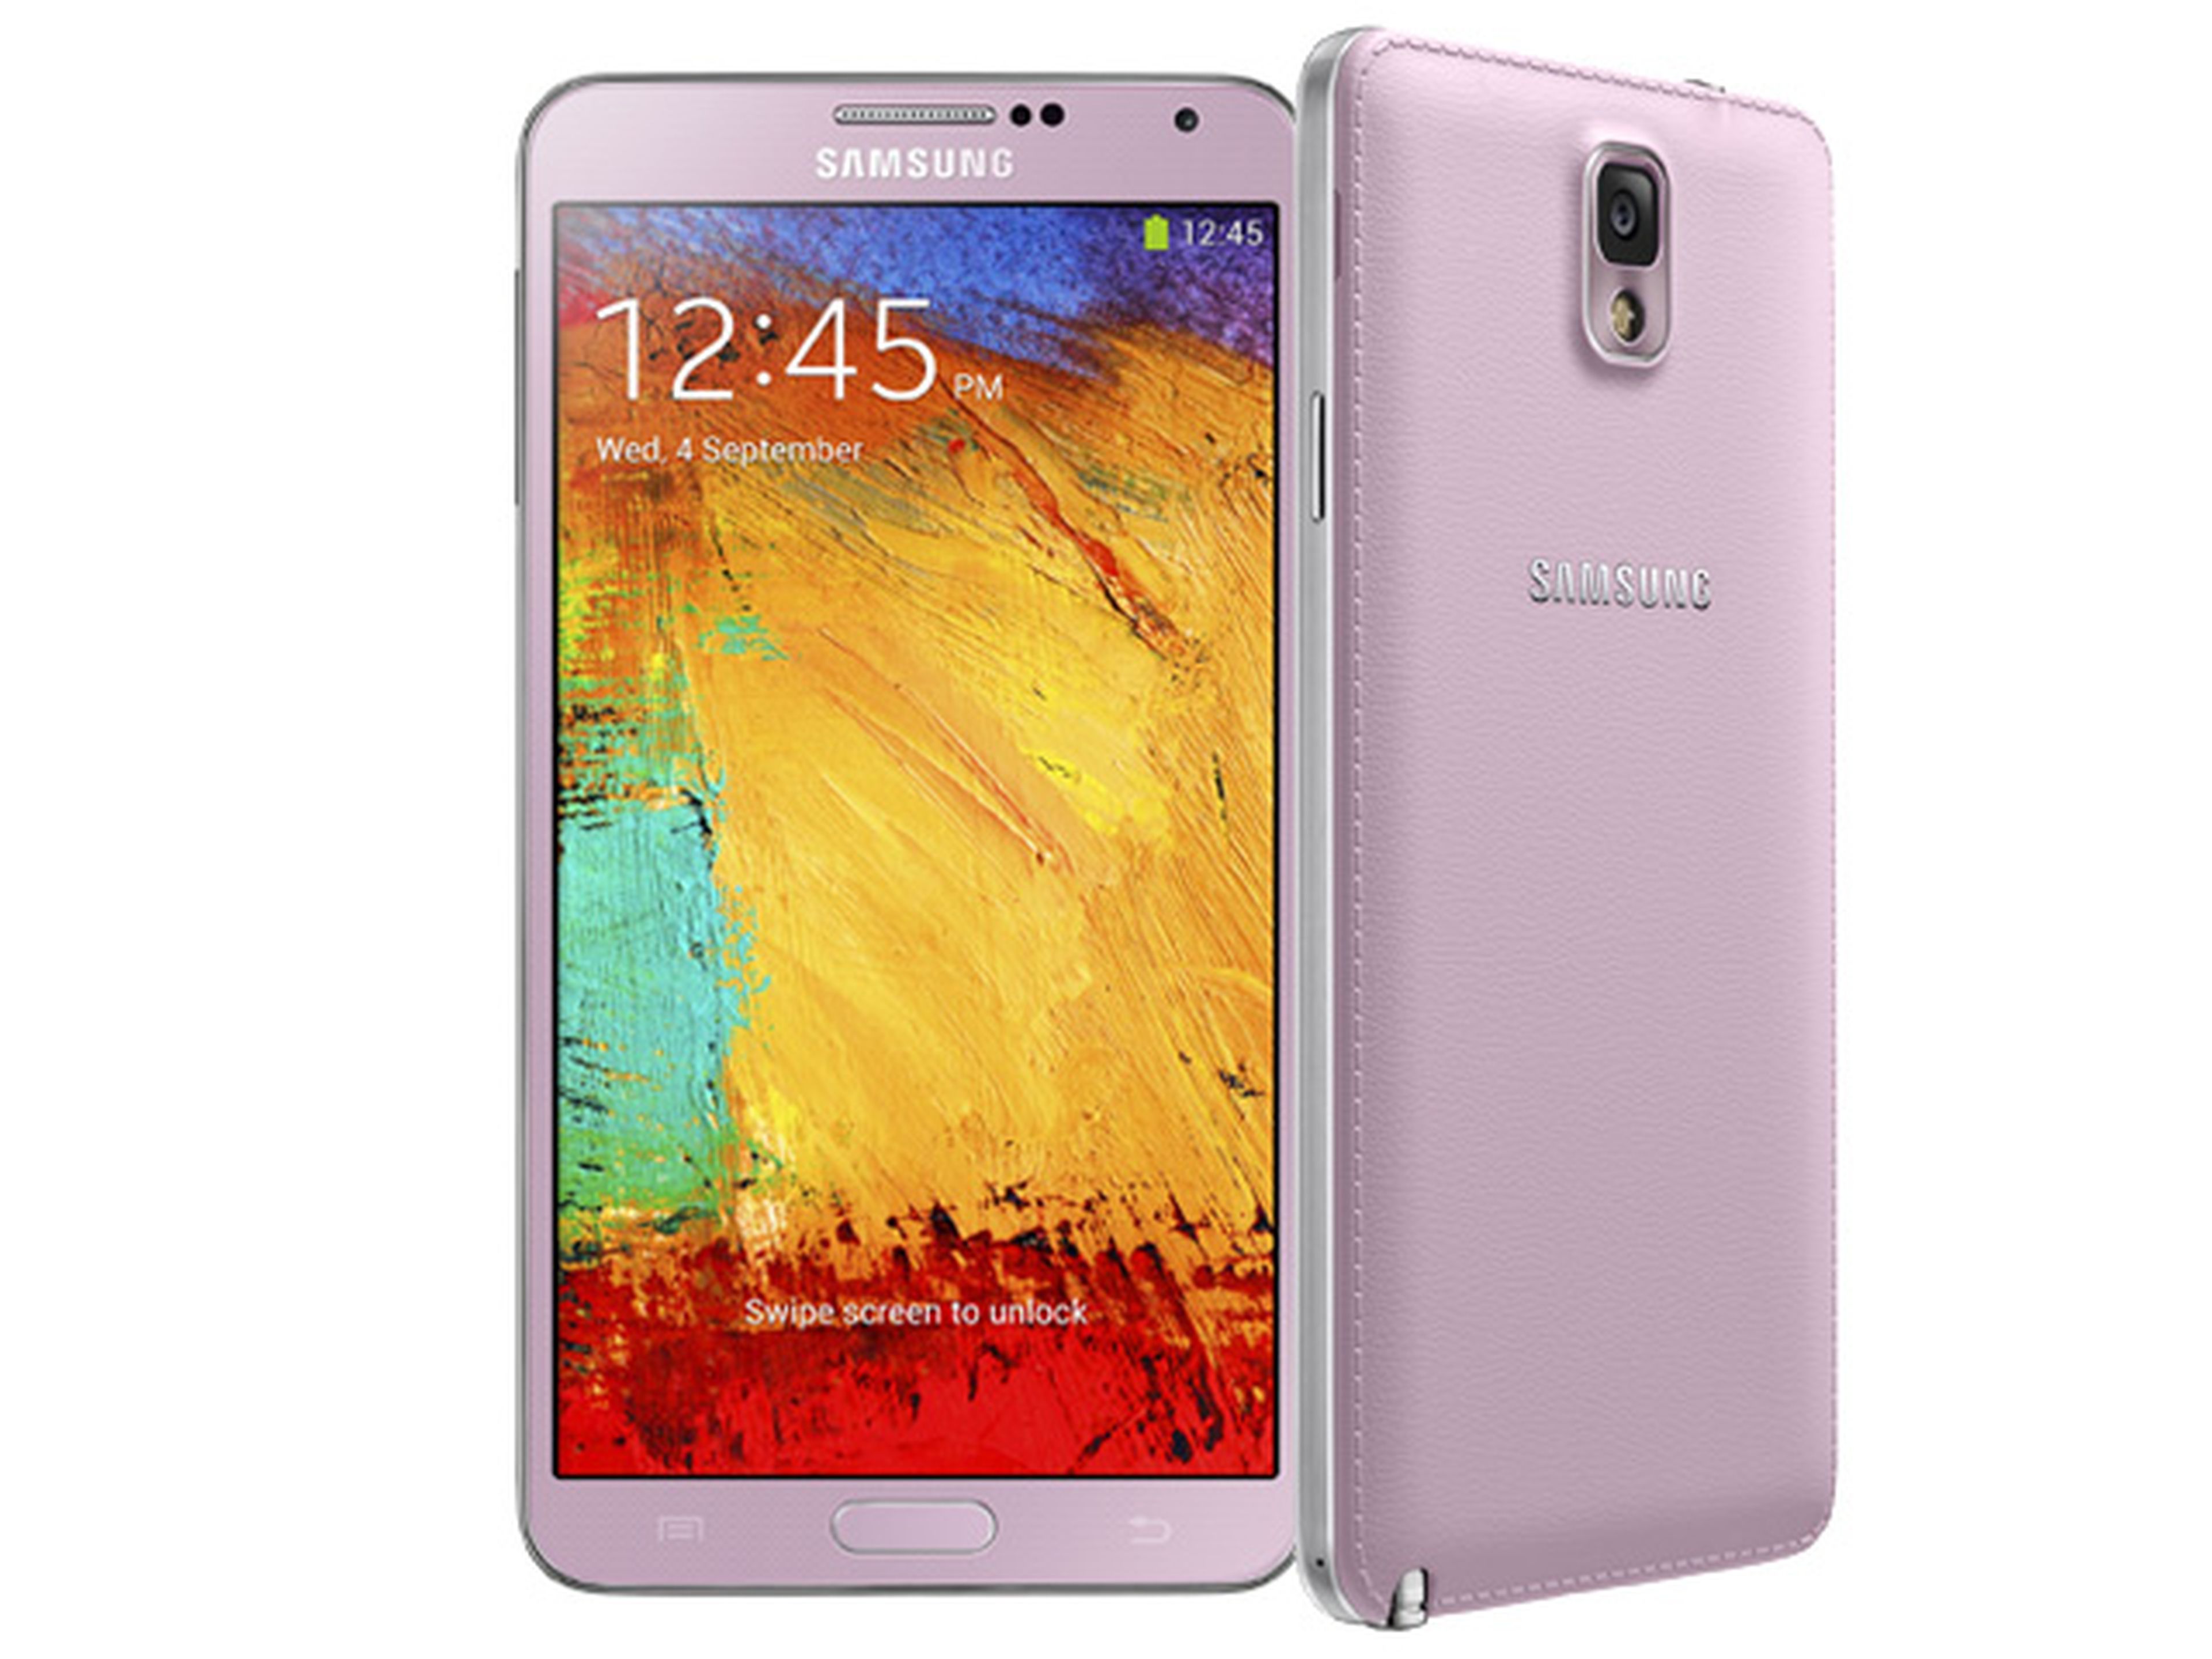 Samsung Galaxy Note 3 Blush Pink